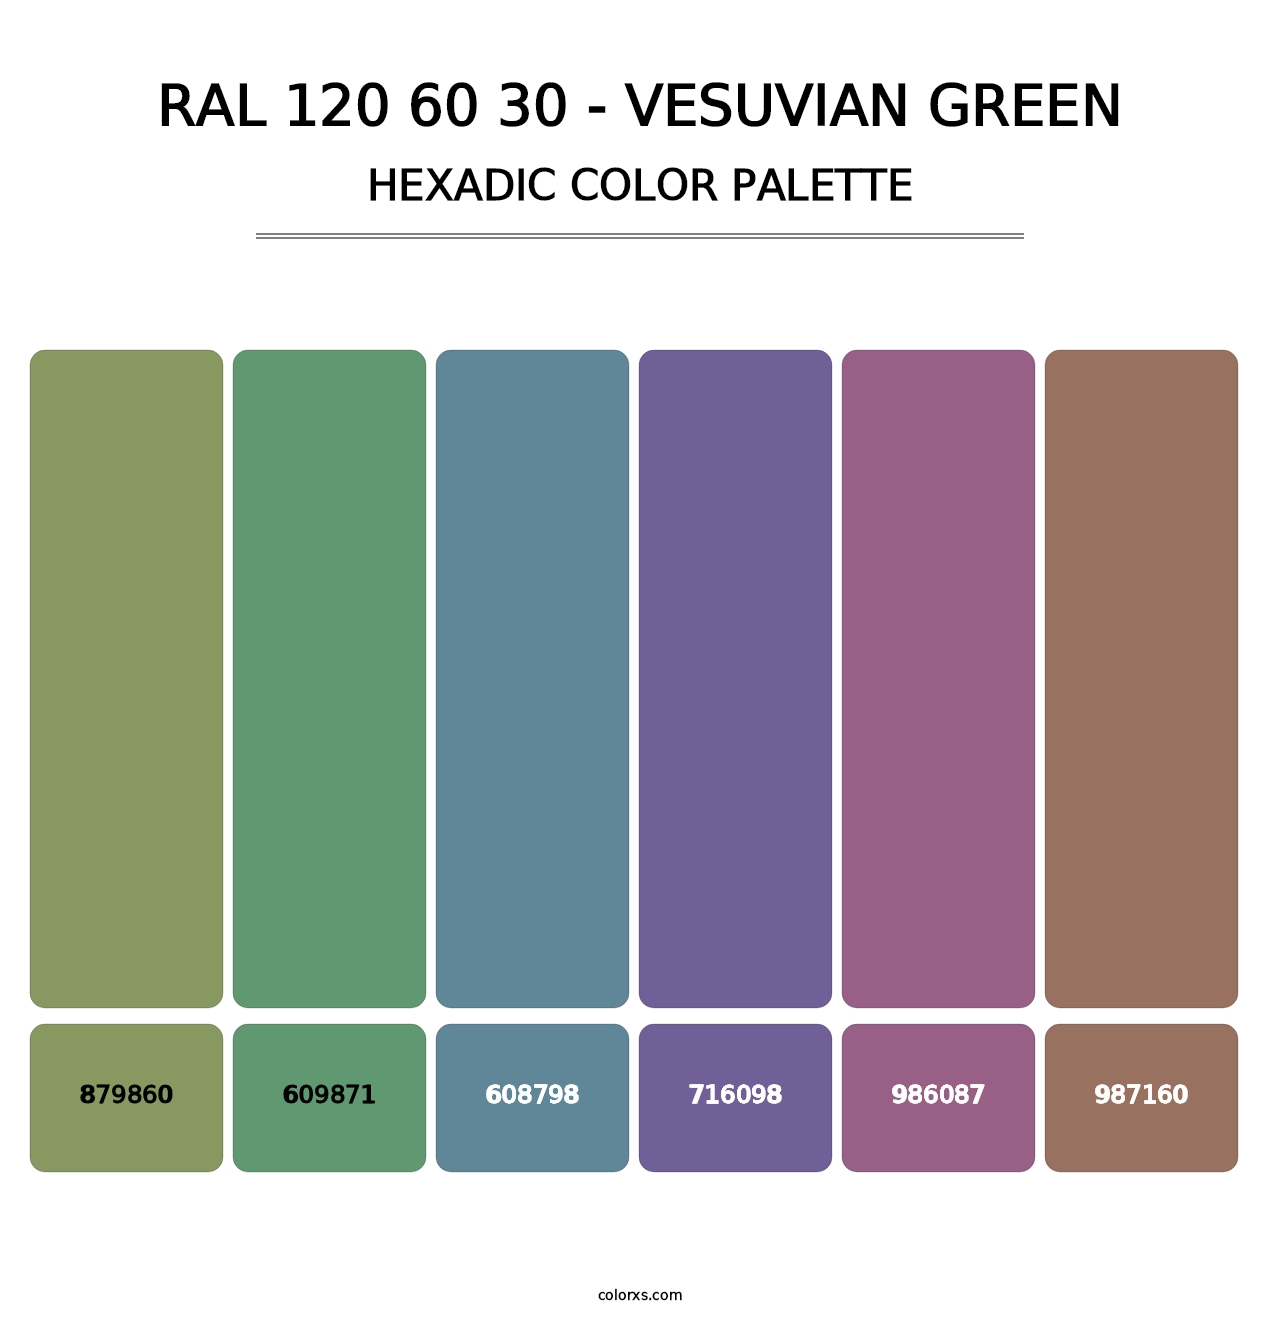 RAL 120 60 30 - Vesuvian Green - Hexadic Color Palette